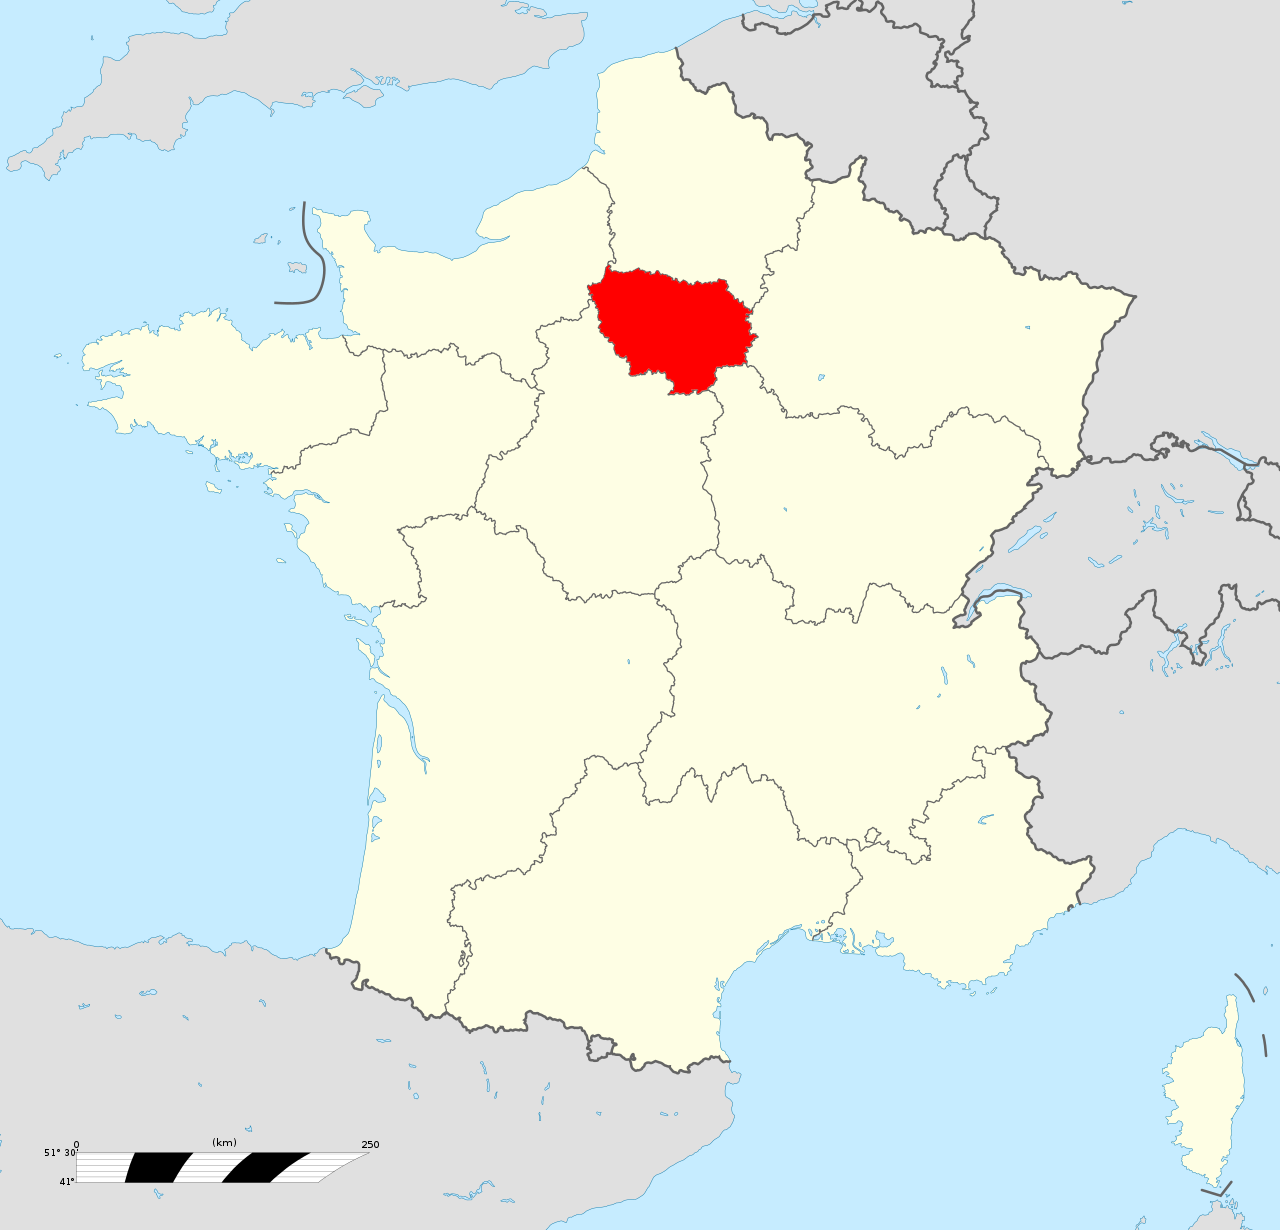 Colonial Exposition Urbex location or around the region Île-de-France (Parijs), France